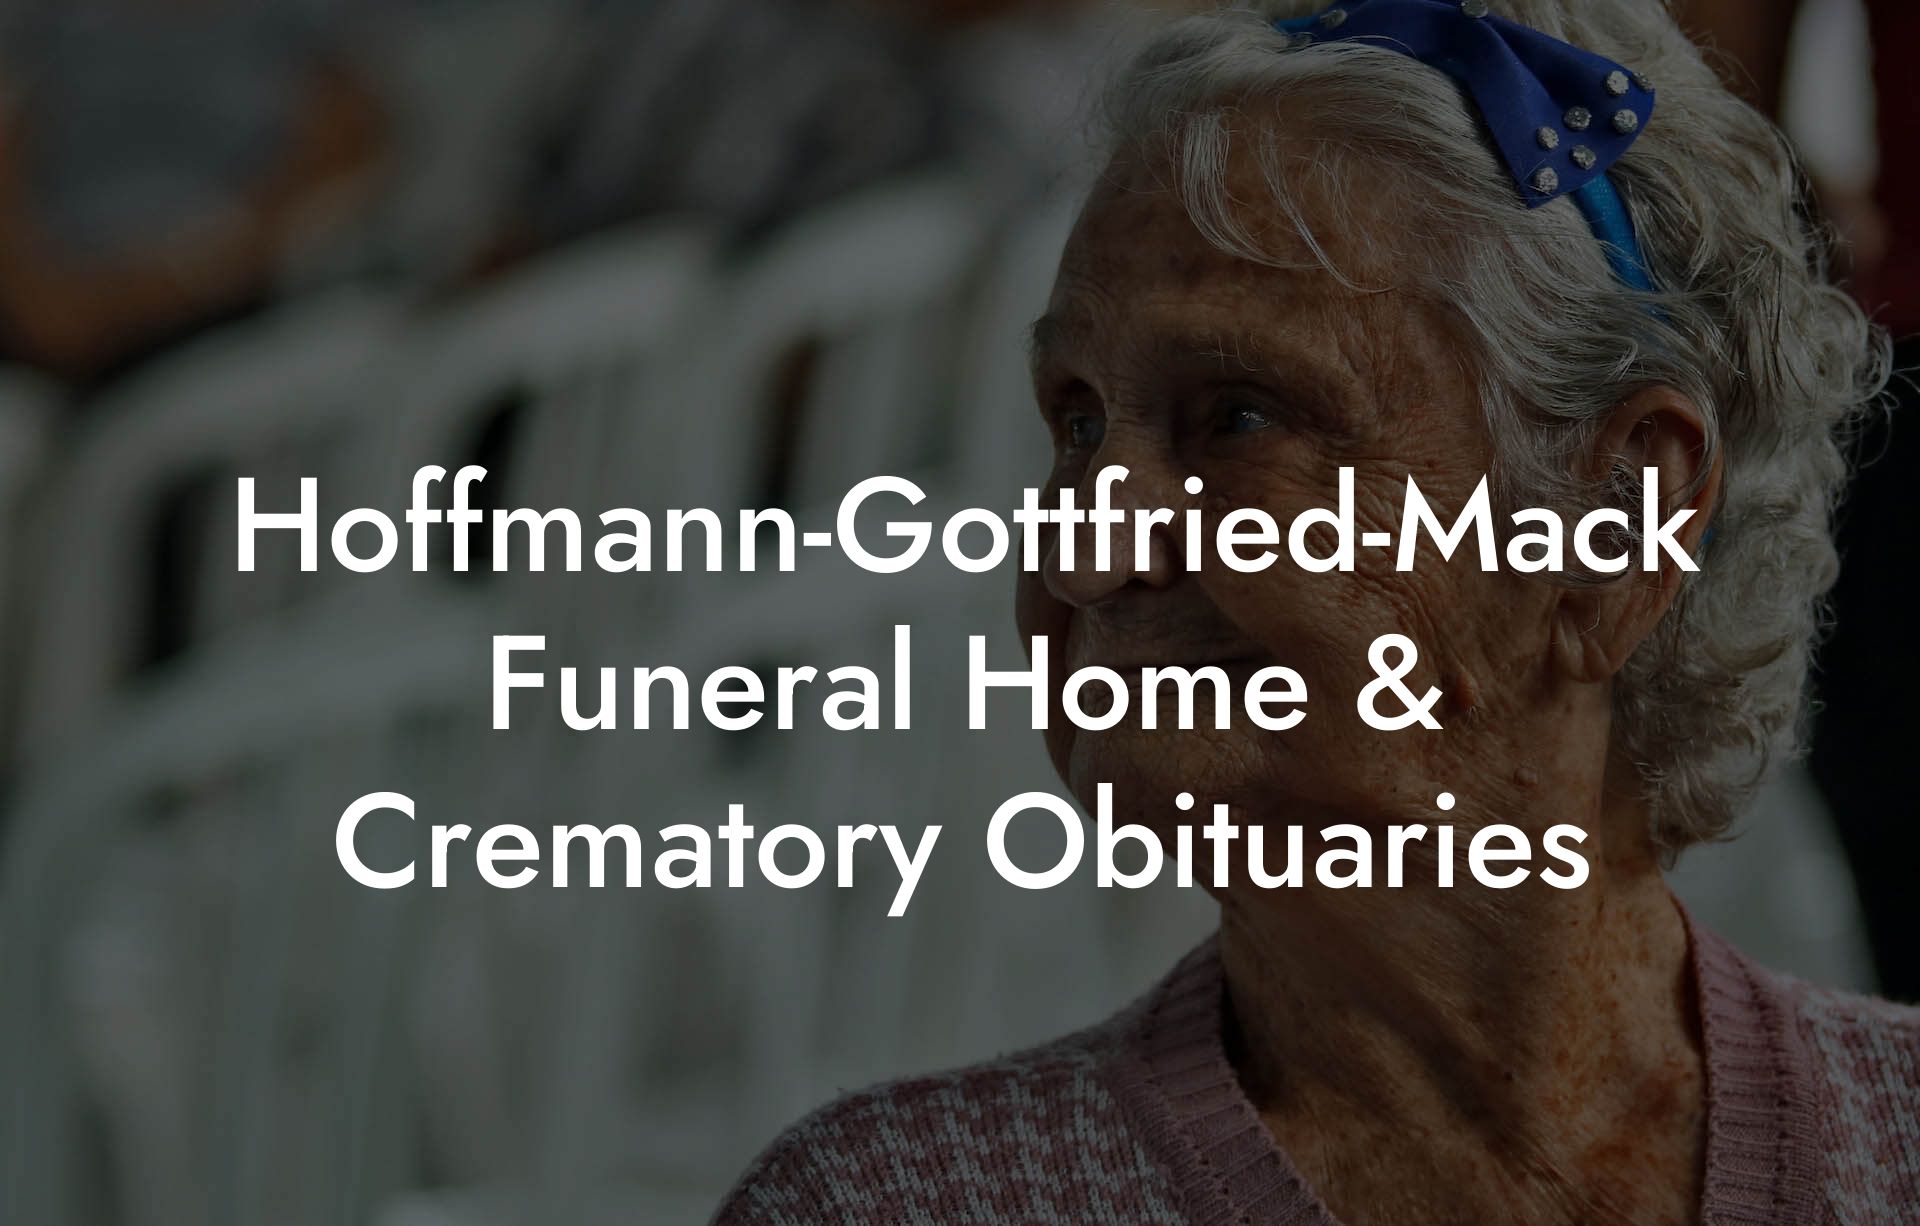 Hoffmann-Gottfried-Mack Funeral Home & Crematory Obituaries